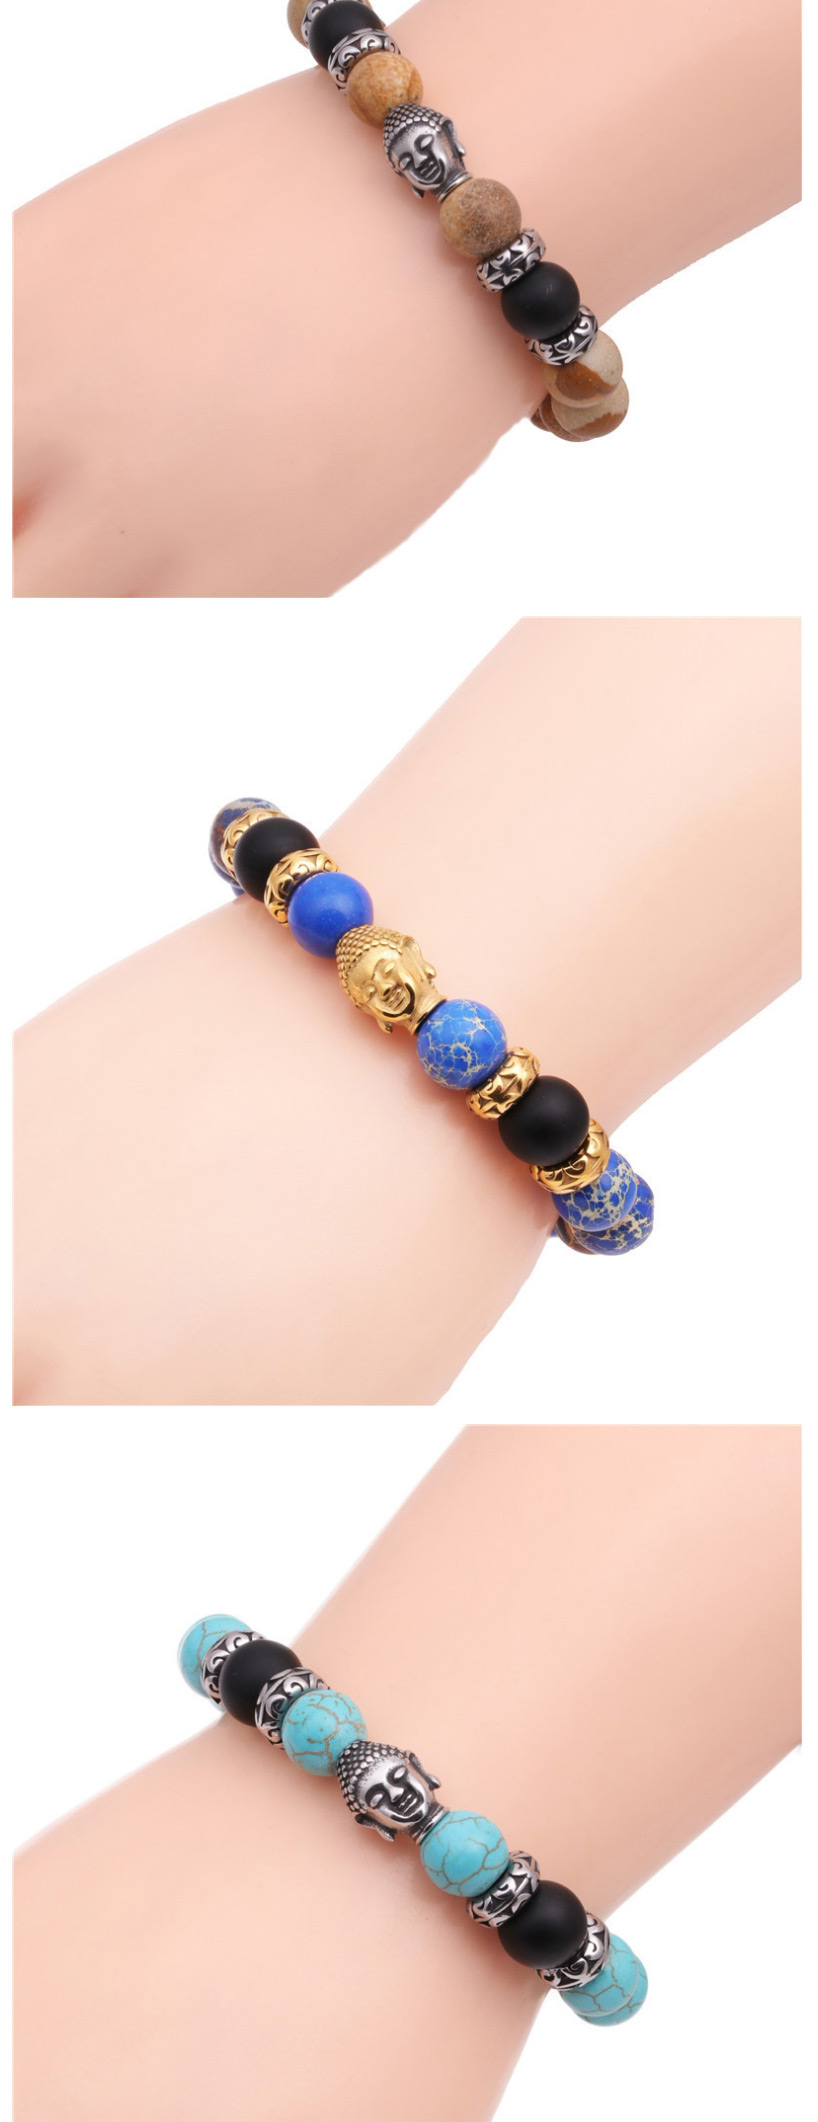 Fashion Gold Royal Blue Emperor Stone Stainless Steel Woven Adjustable Buddha Head Bracelet For Men,Bracelets